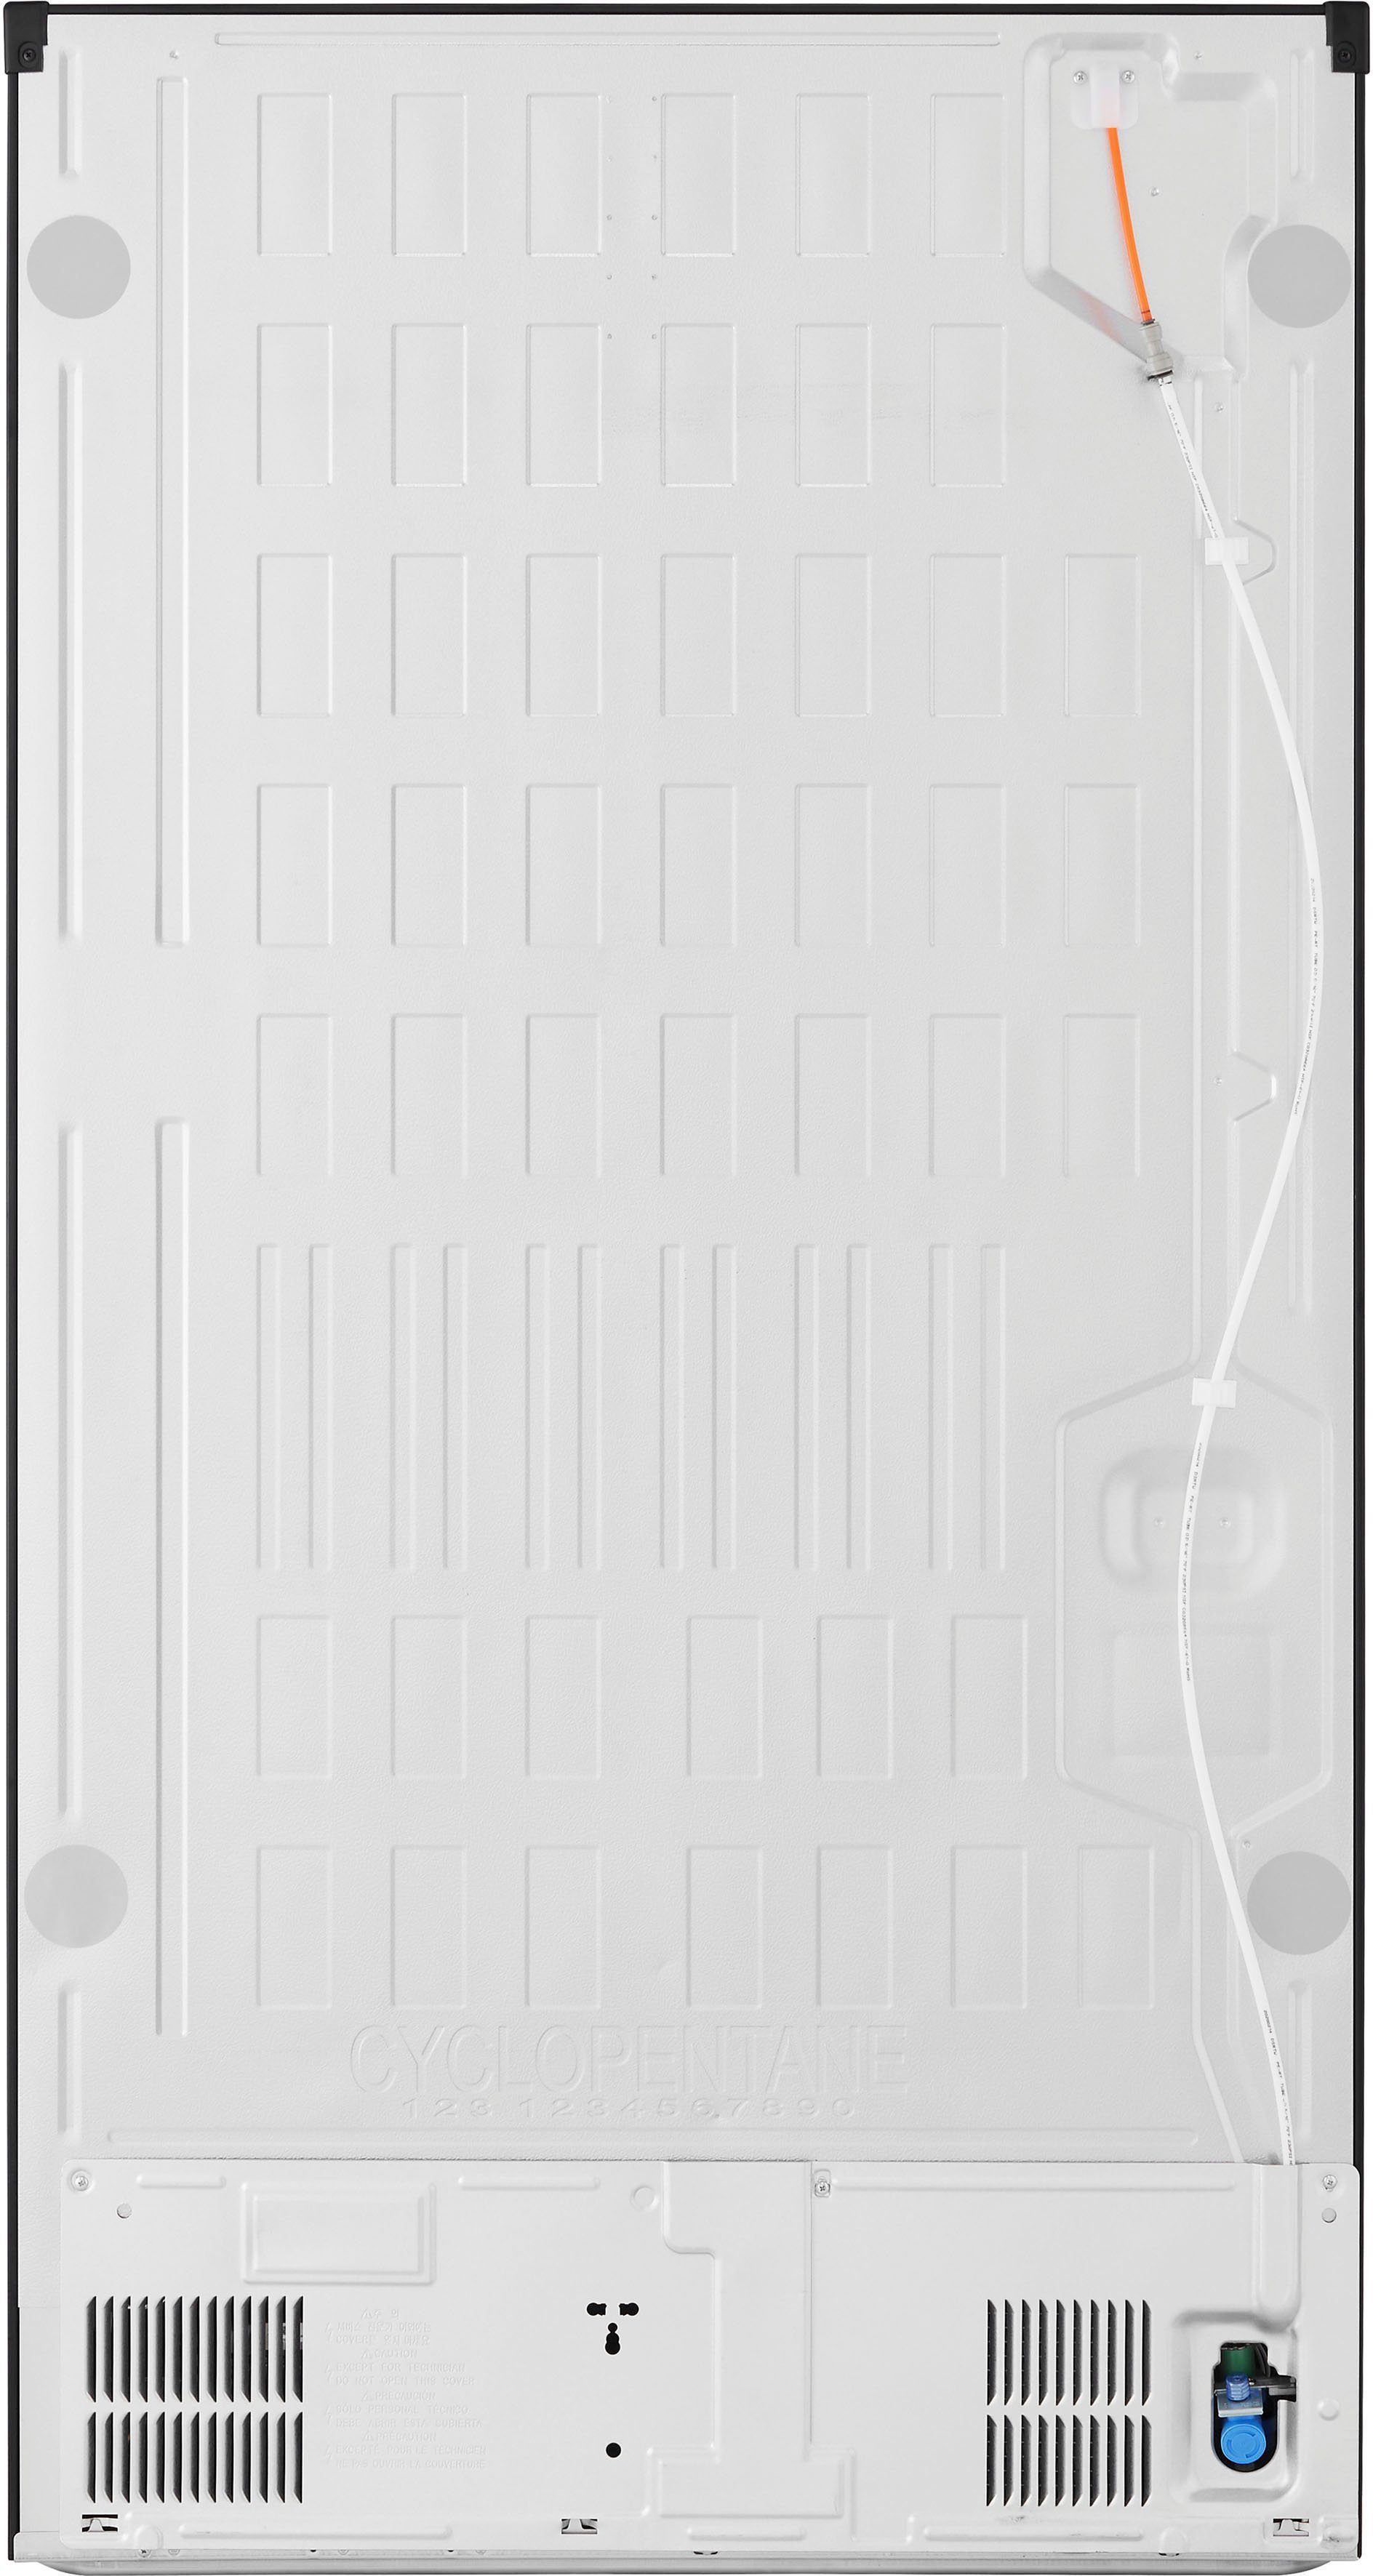 LG Multi Door GMX945MC9F, 179,3 cm breit hoch, 91,2 cm